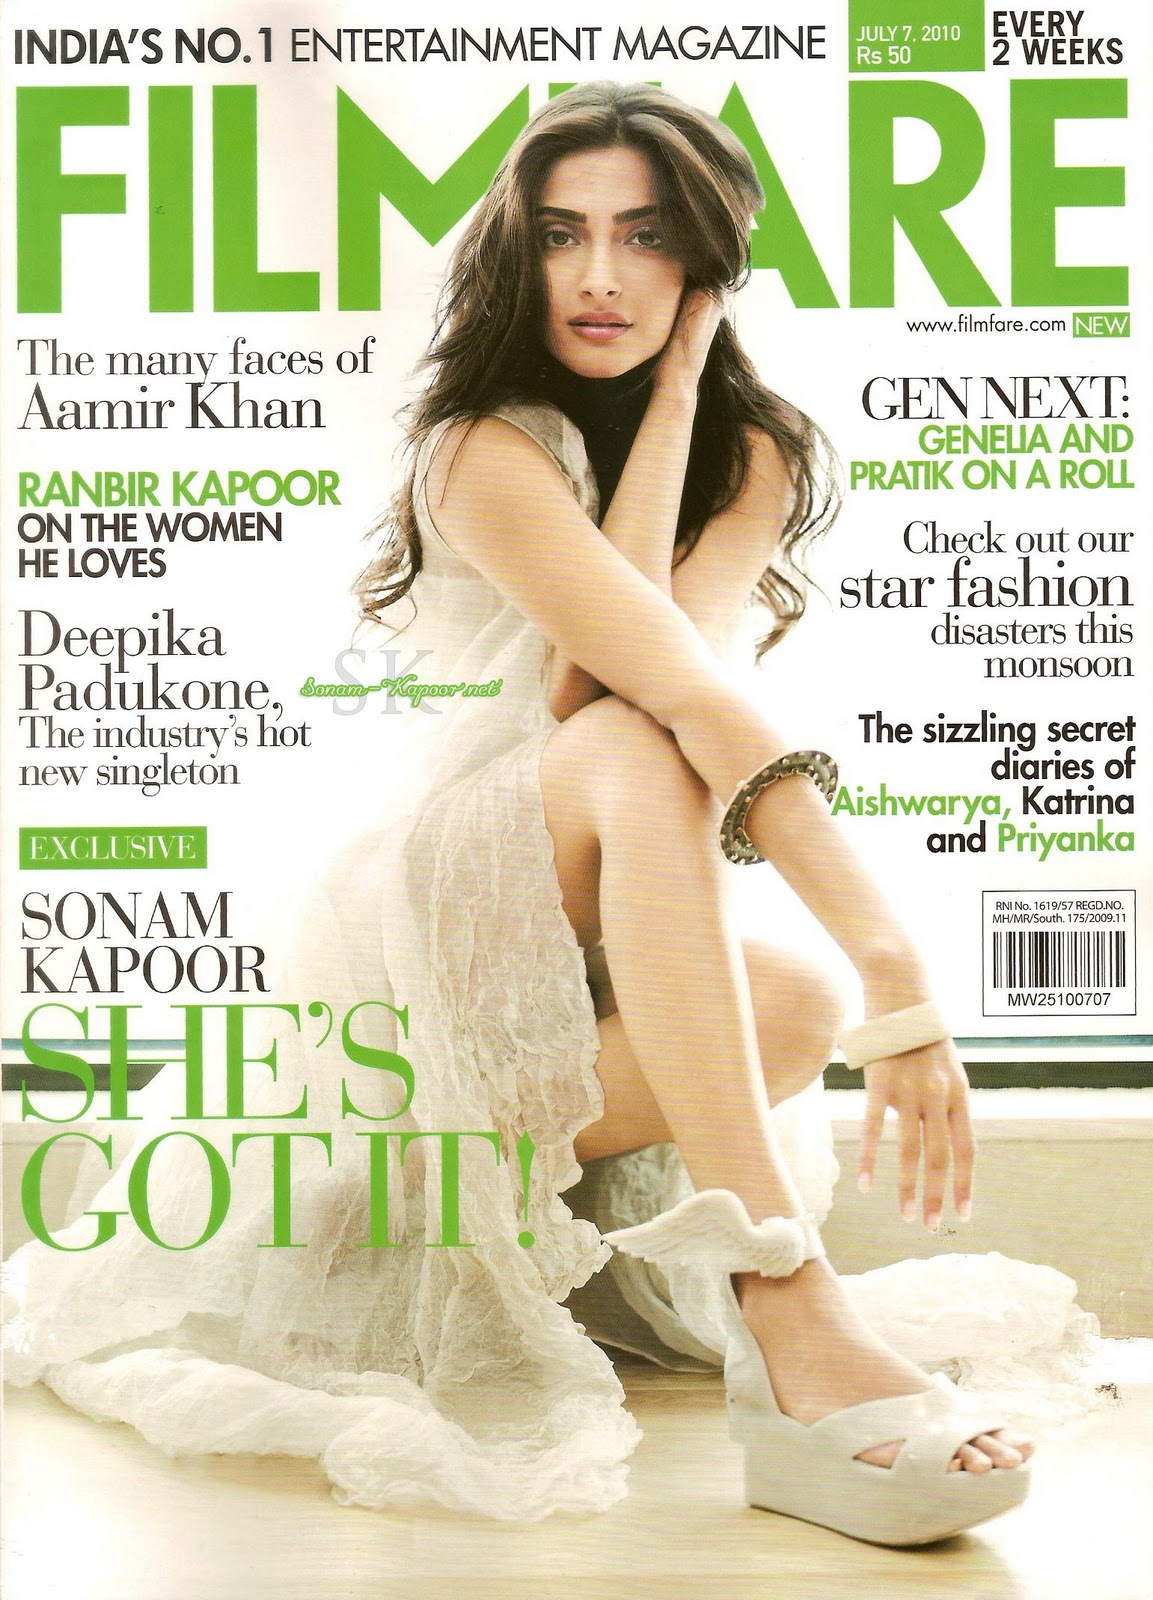 Sonam Kapoor | Indian Celeb Bare Feet Beauties!